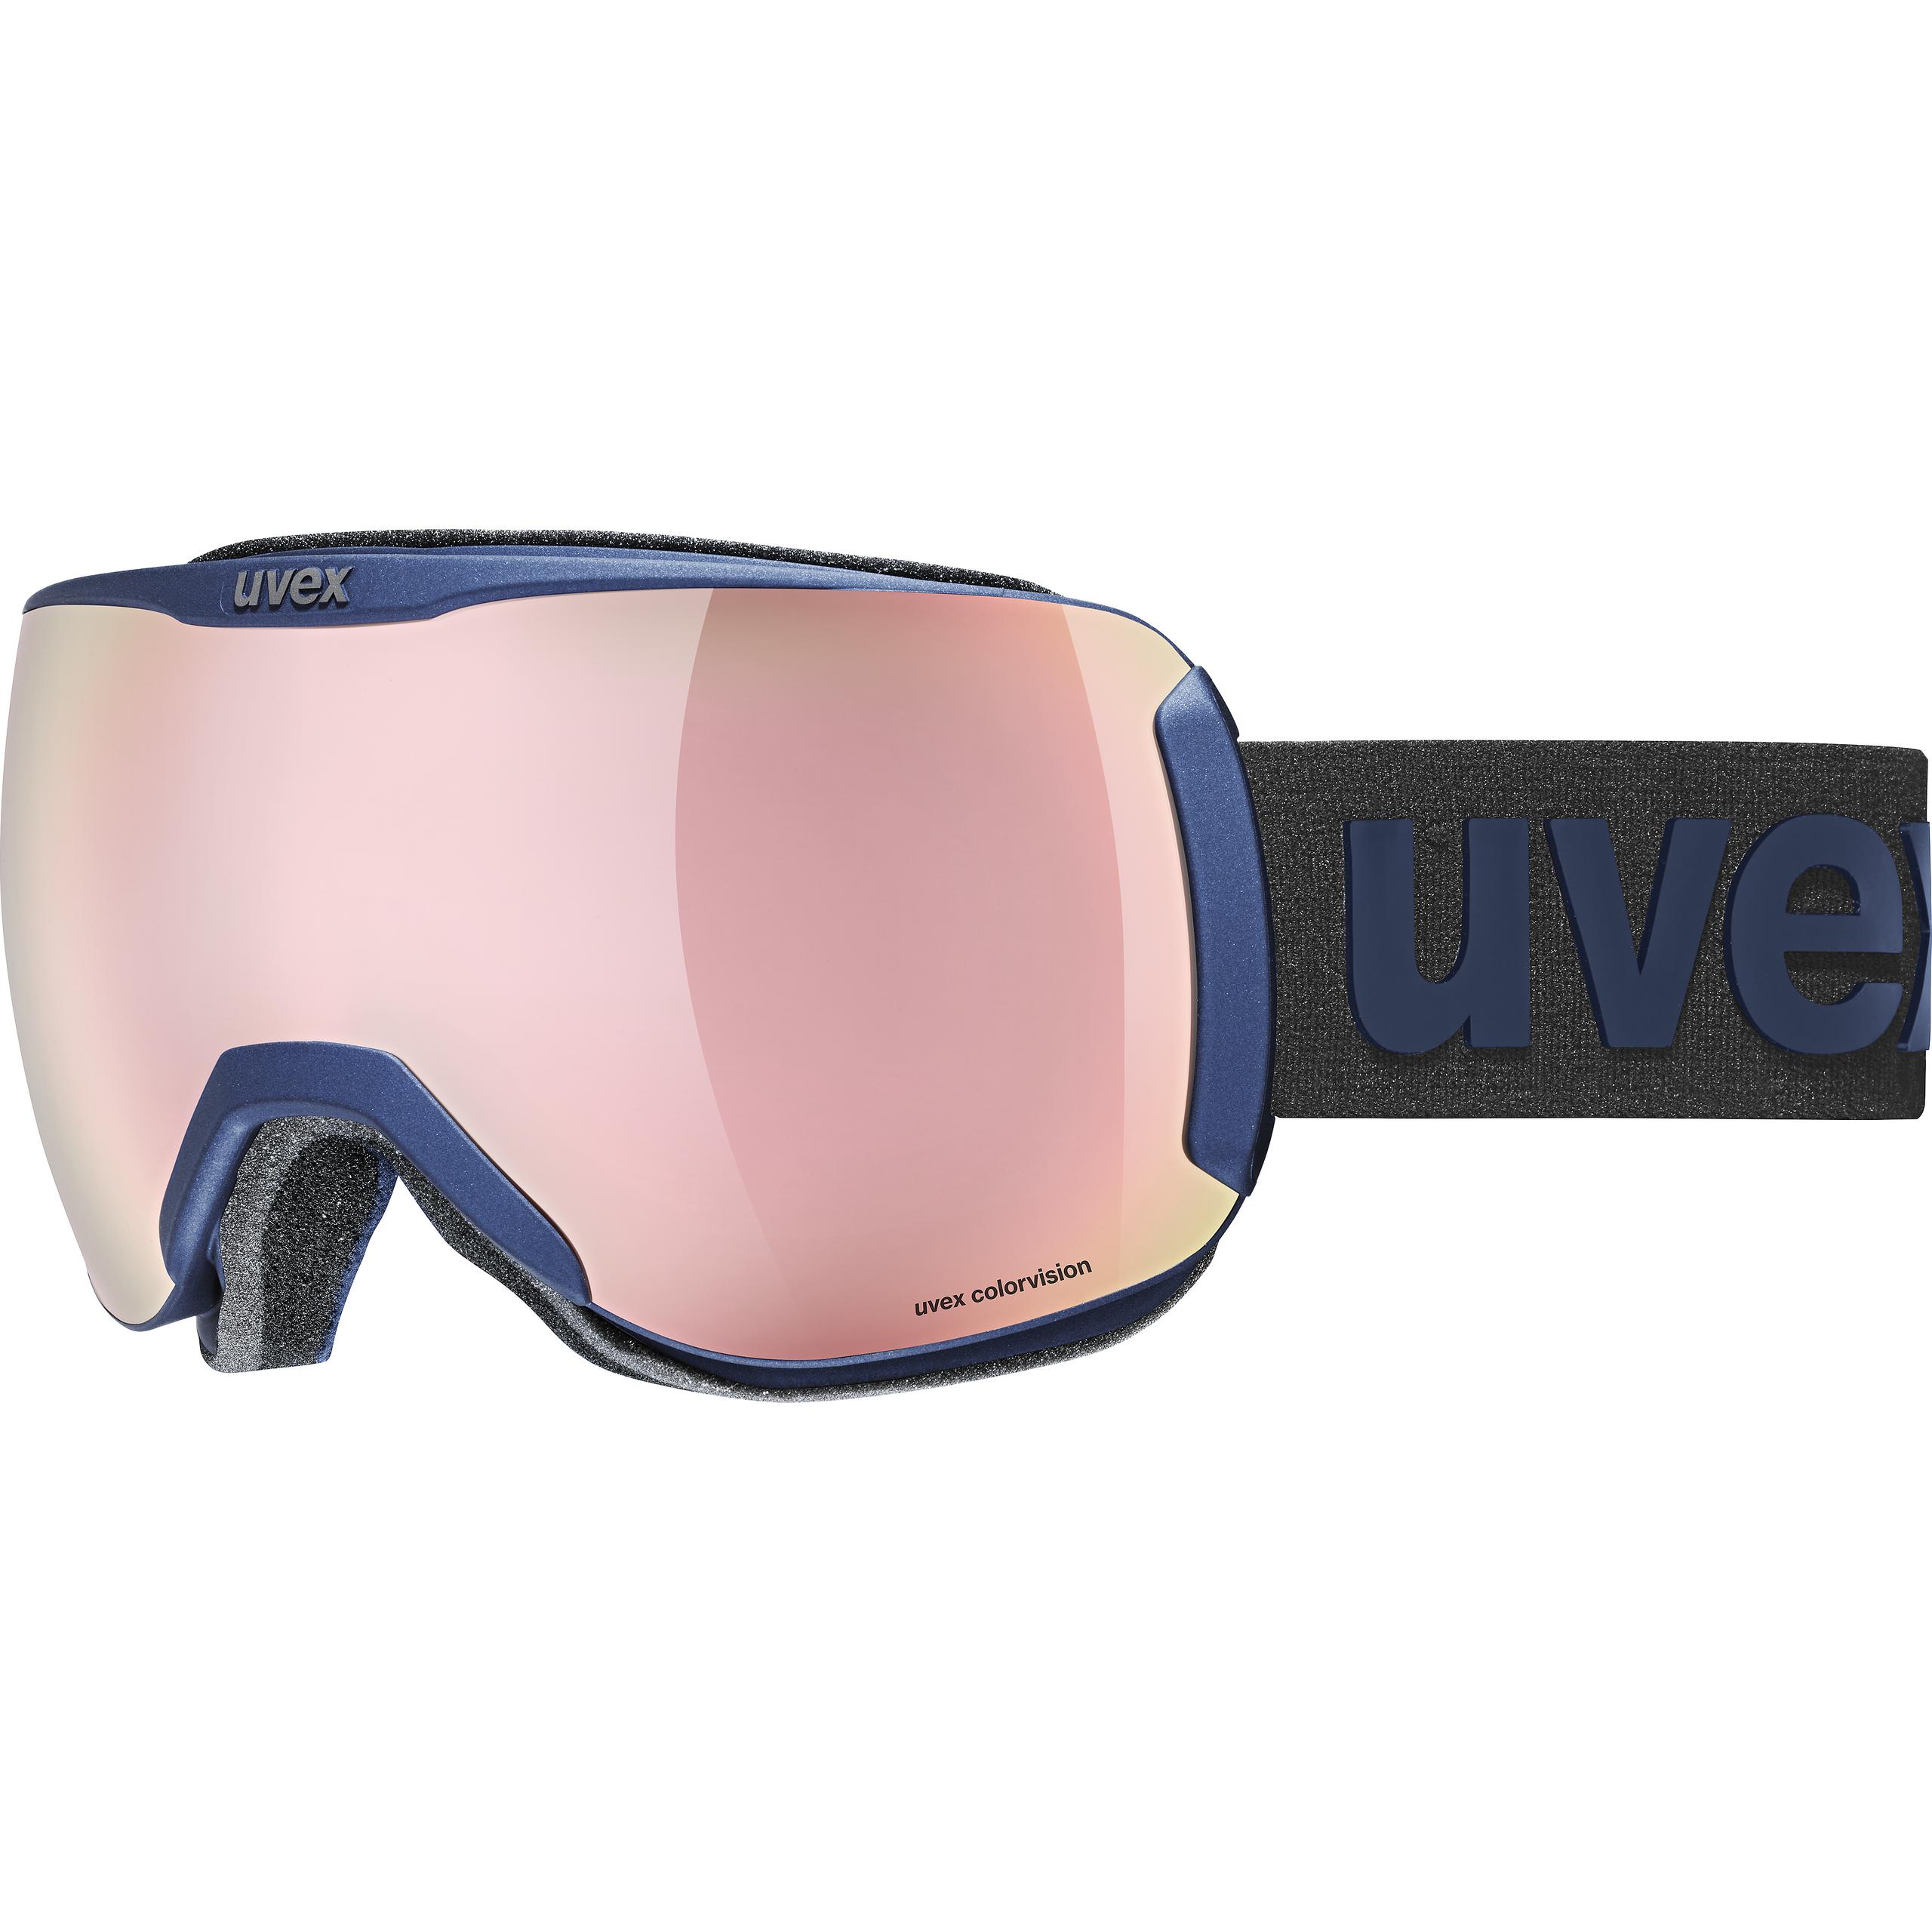 UVEX CEVRON LM LITEMIRROR Skibrille Snowboardbrille Collection 2019 NEU !!! 